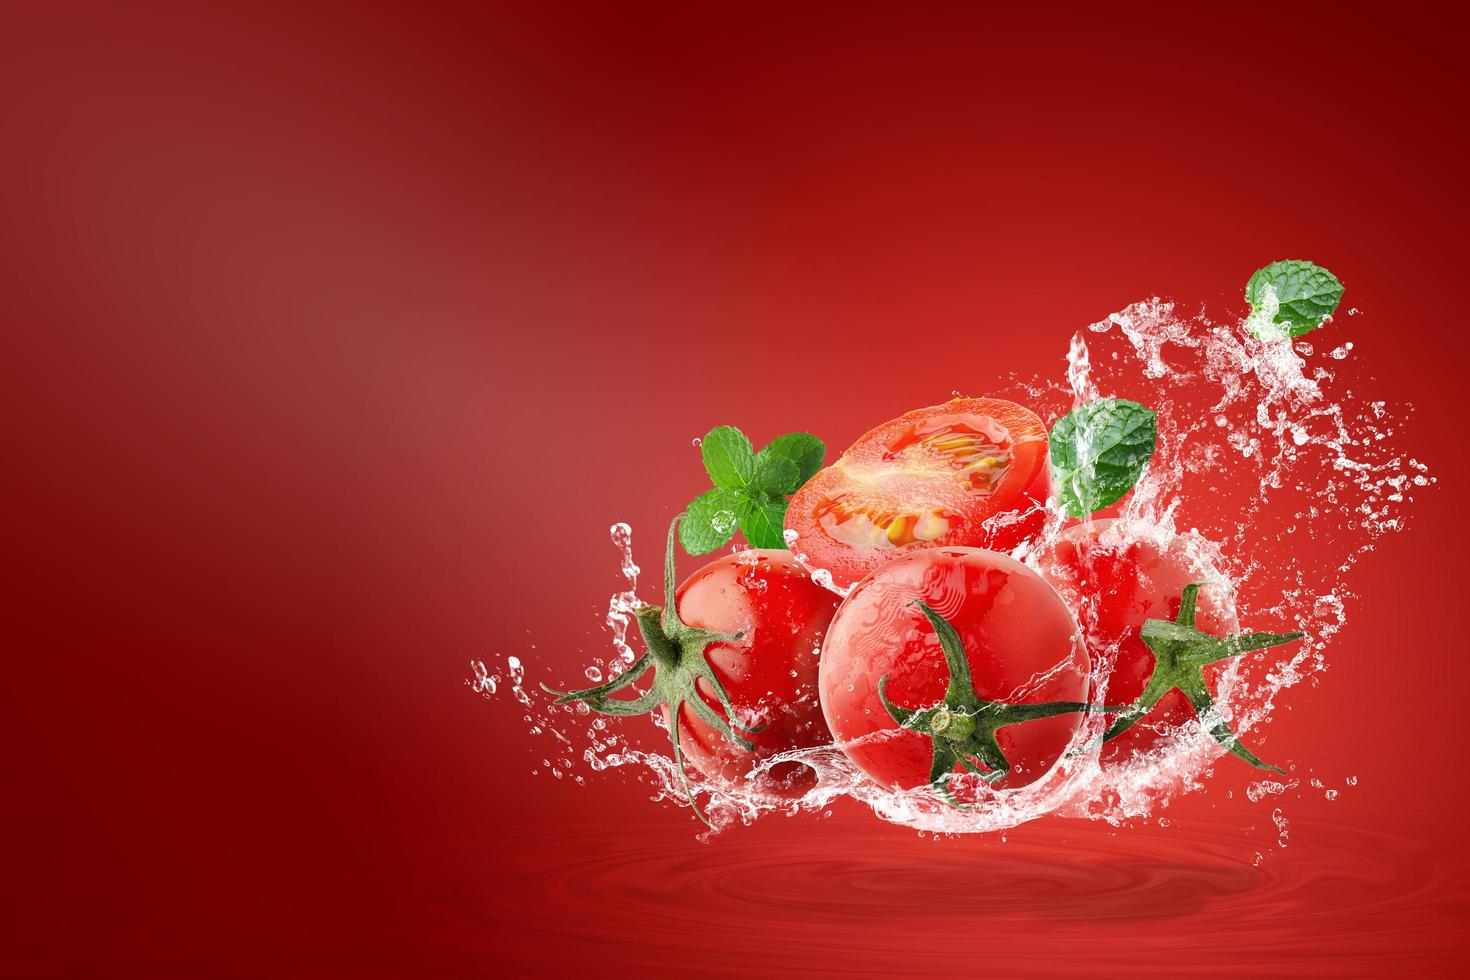 Water splashing on fresh red tomatoes  photo